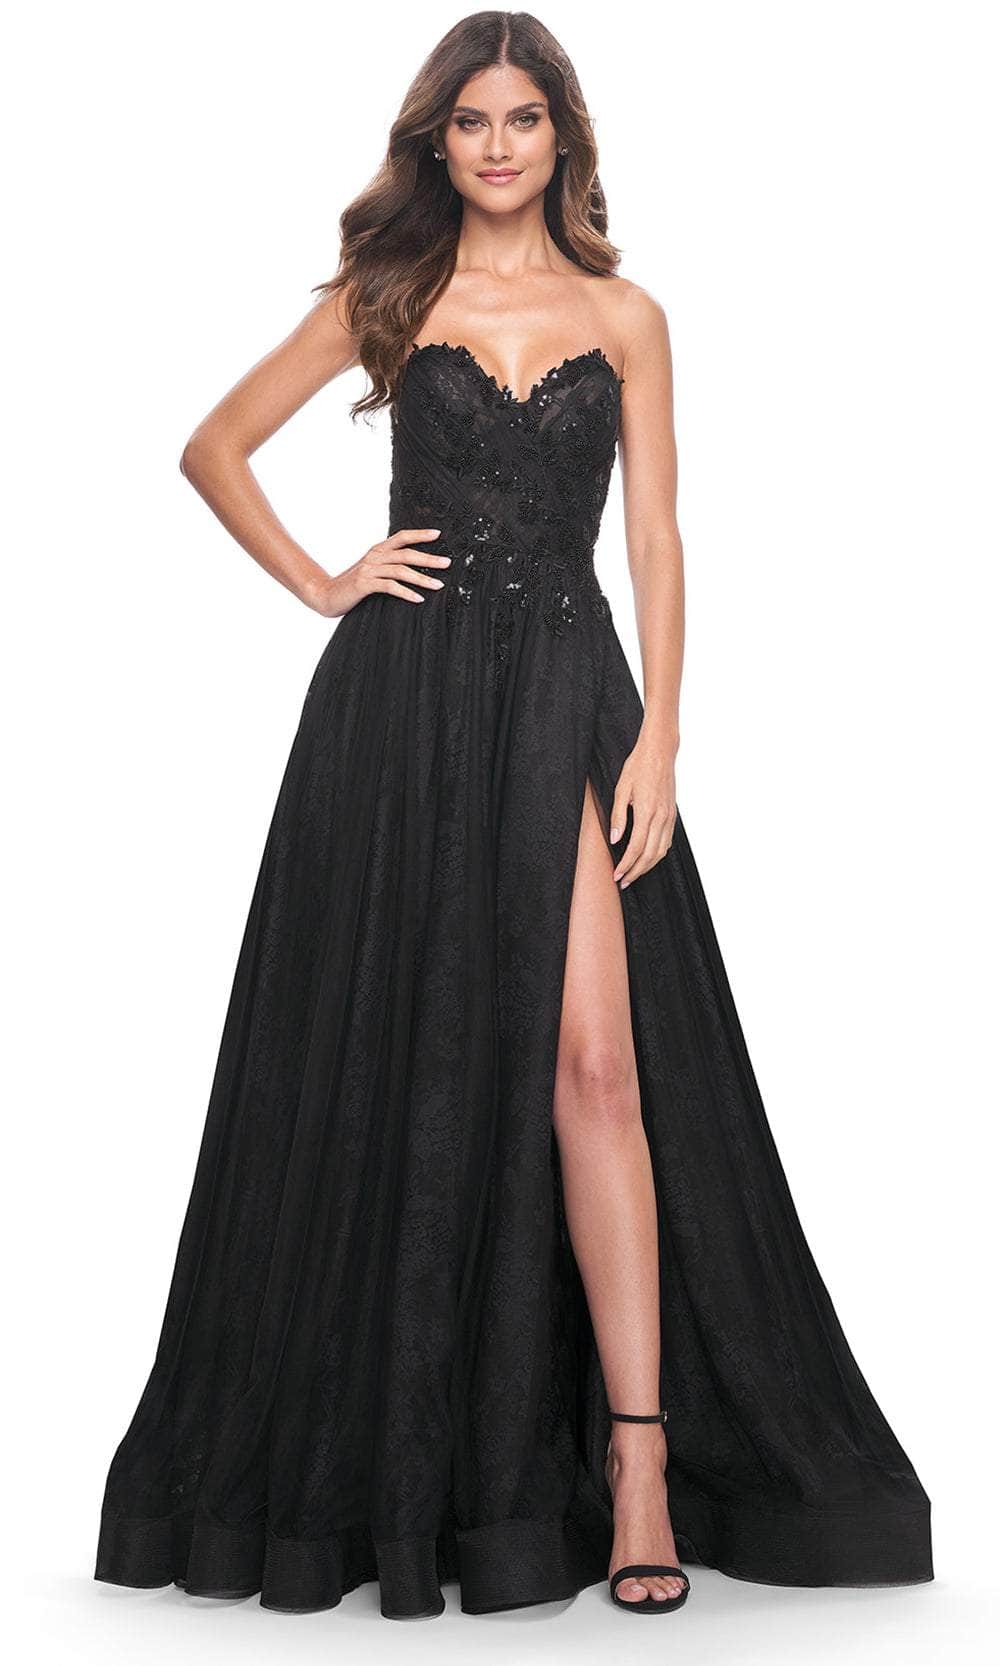 La Femme 31954 - Appliqued Strapless A-Line Prom Dress
